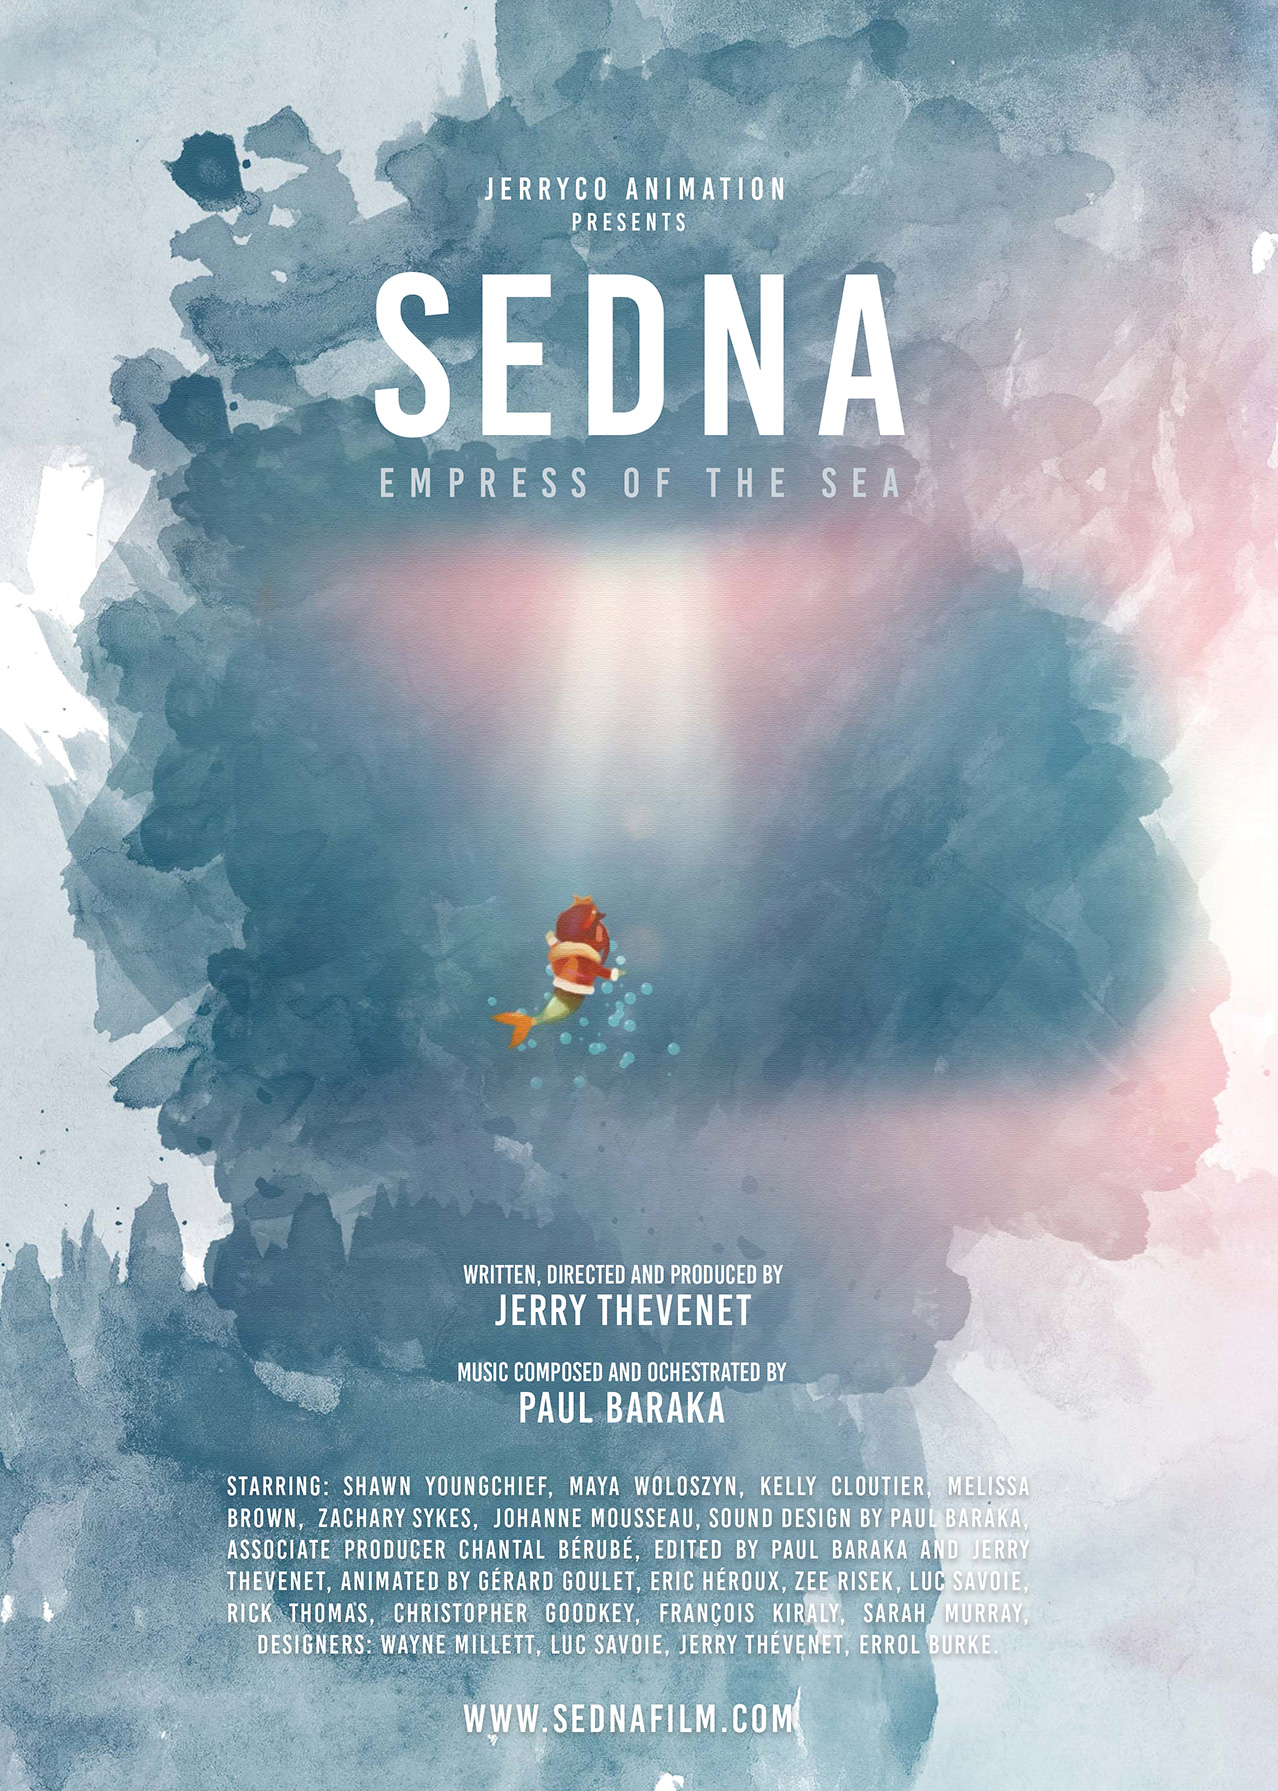 LIT Talent Awards - Sedna, Empress of The Sea